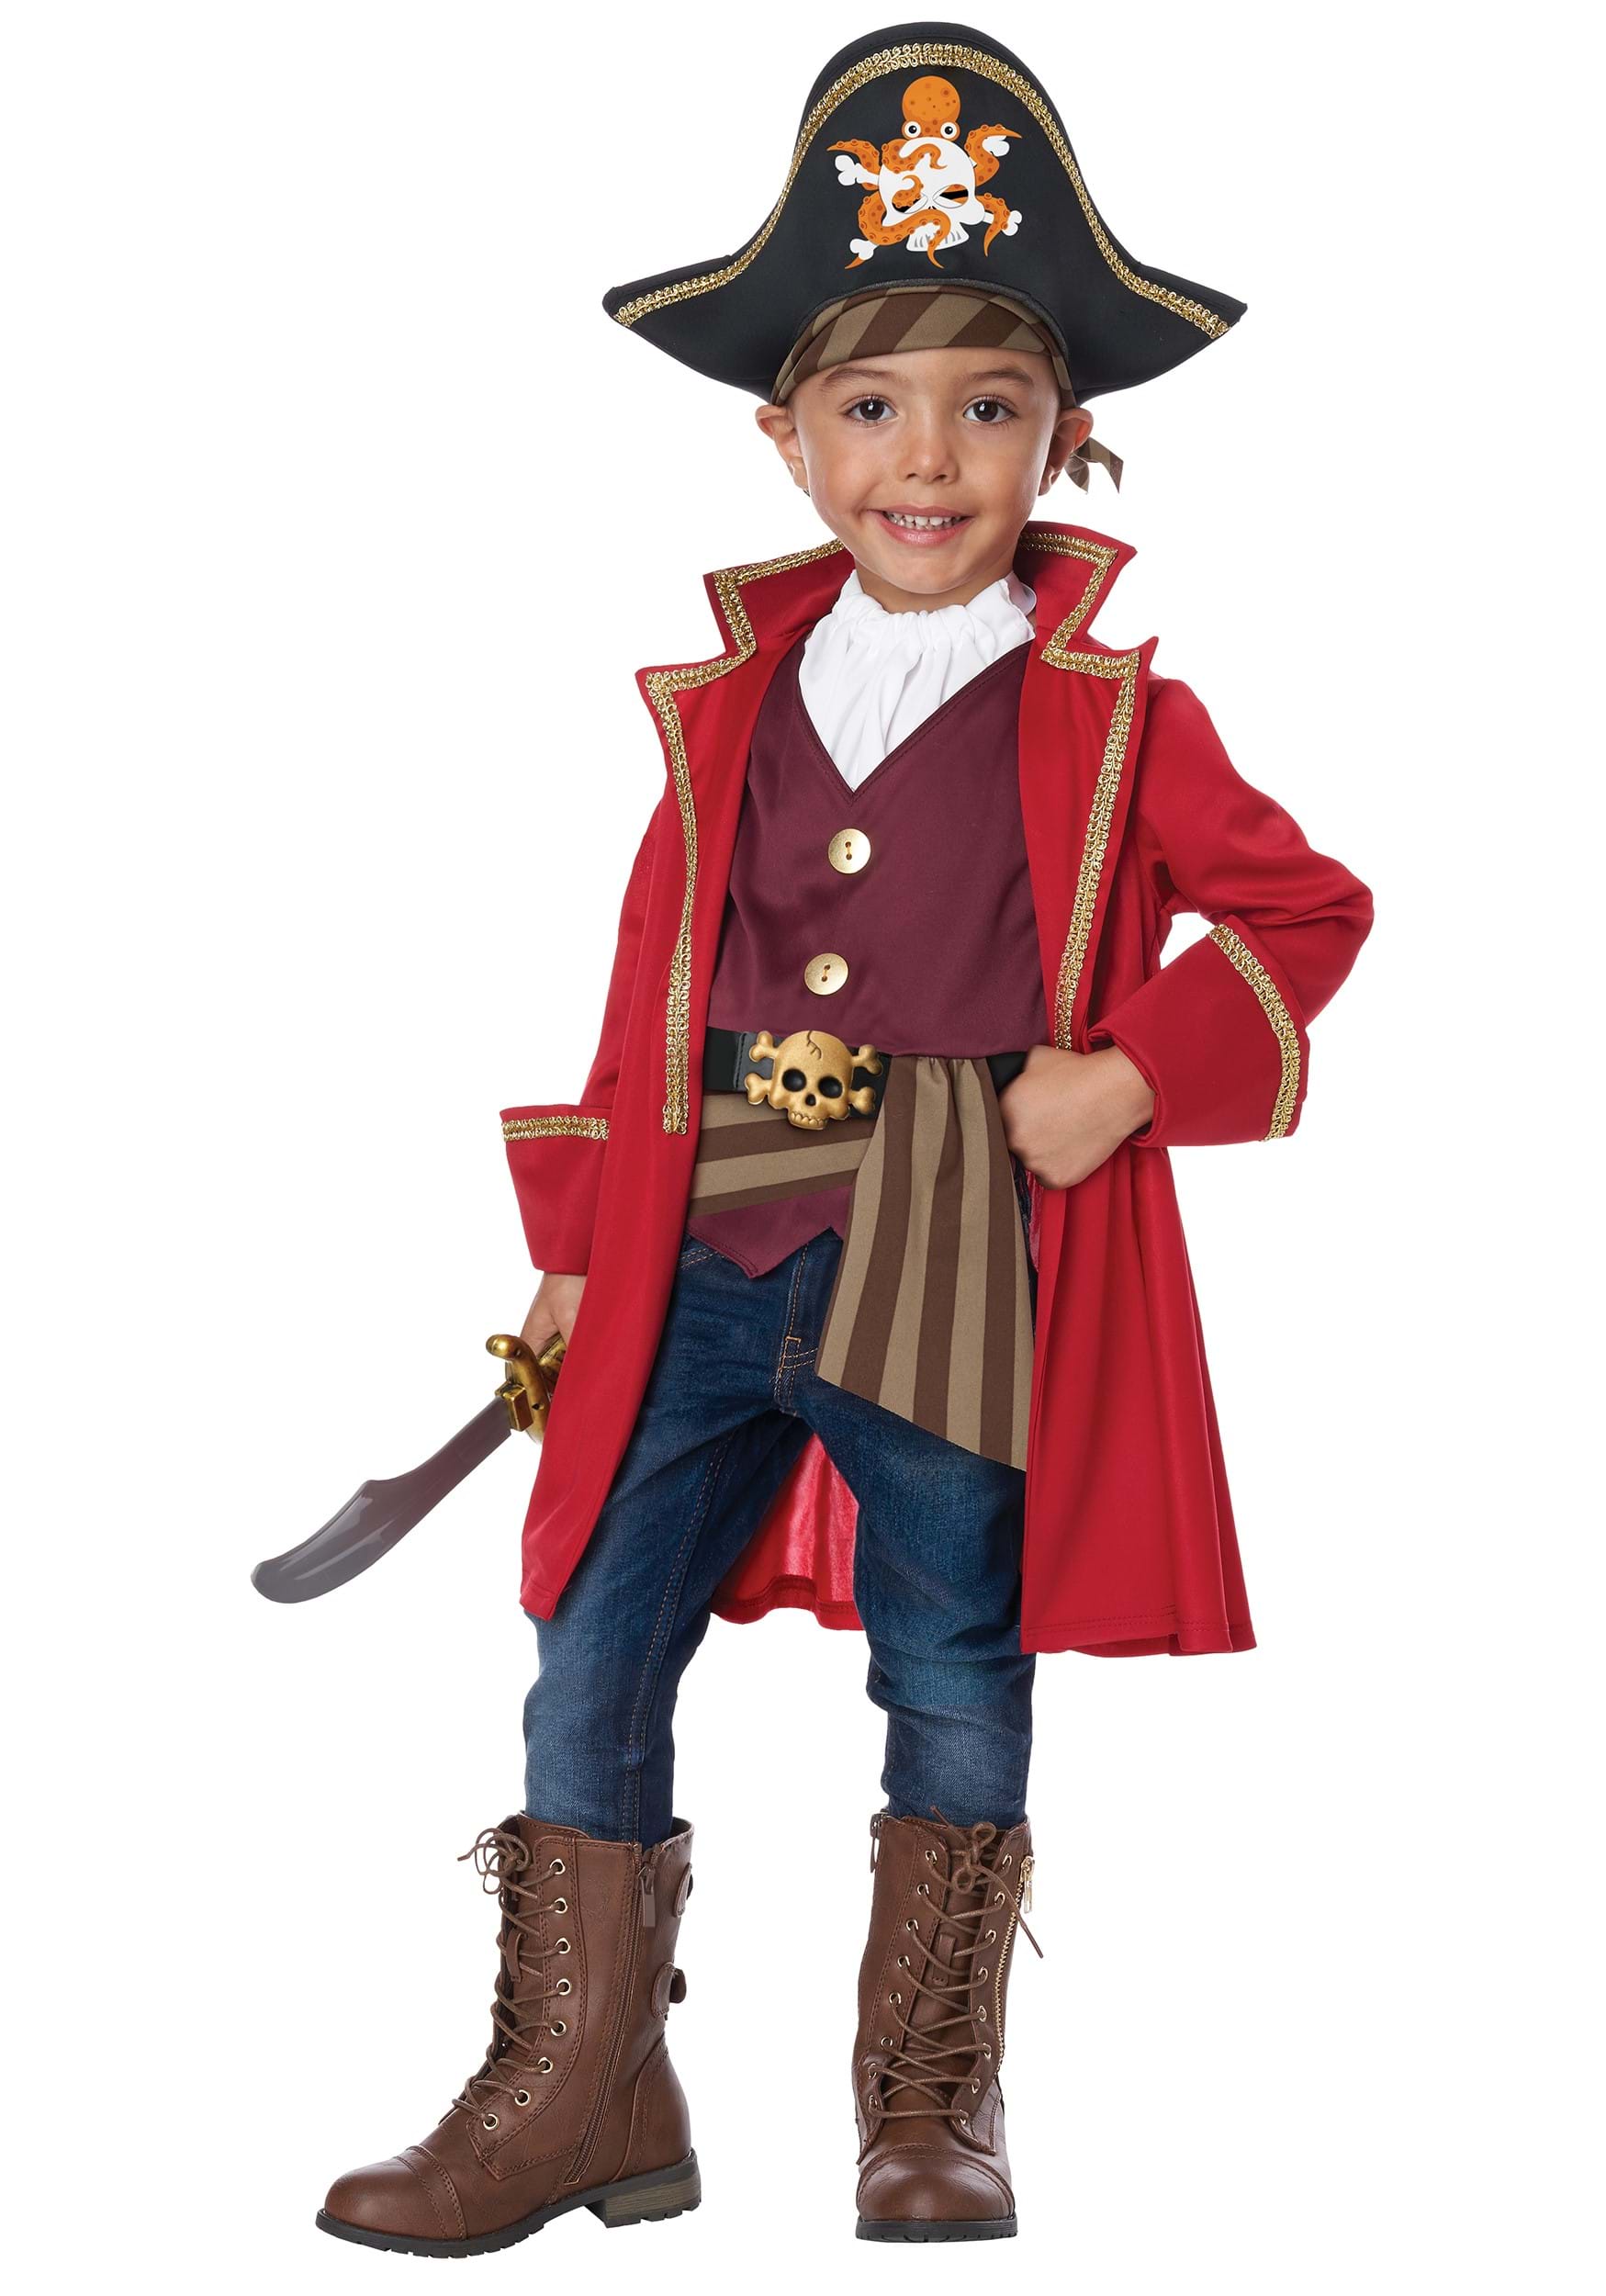 Boy’s Cap’n Shorty Toddler Pirate Costume